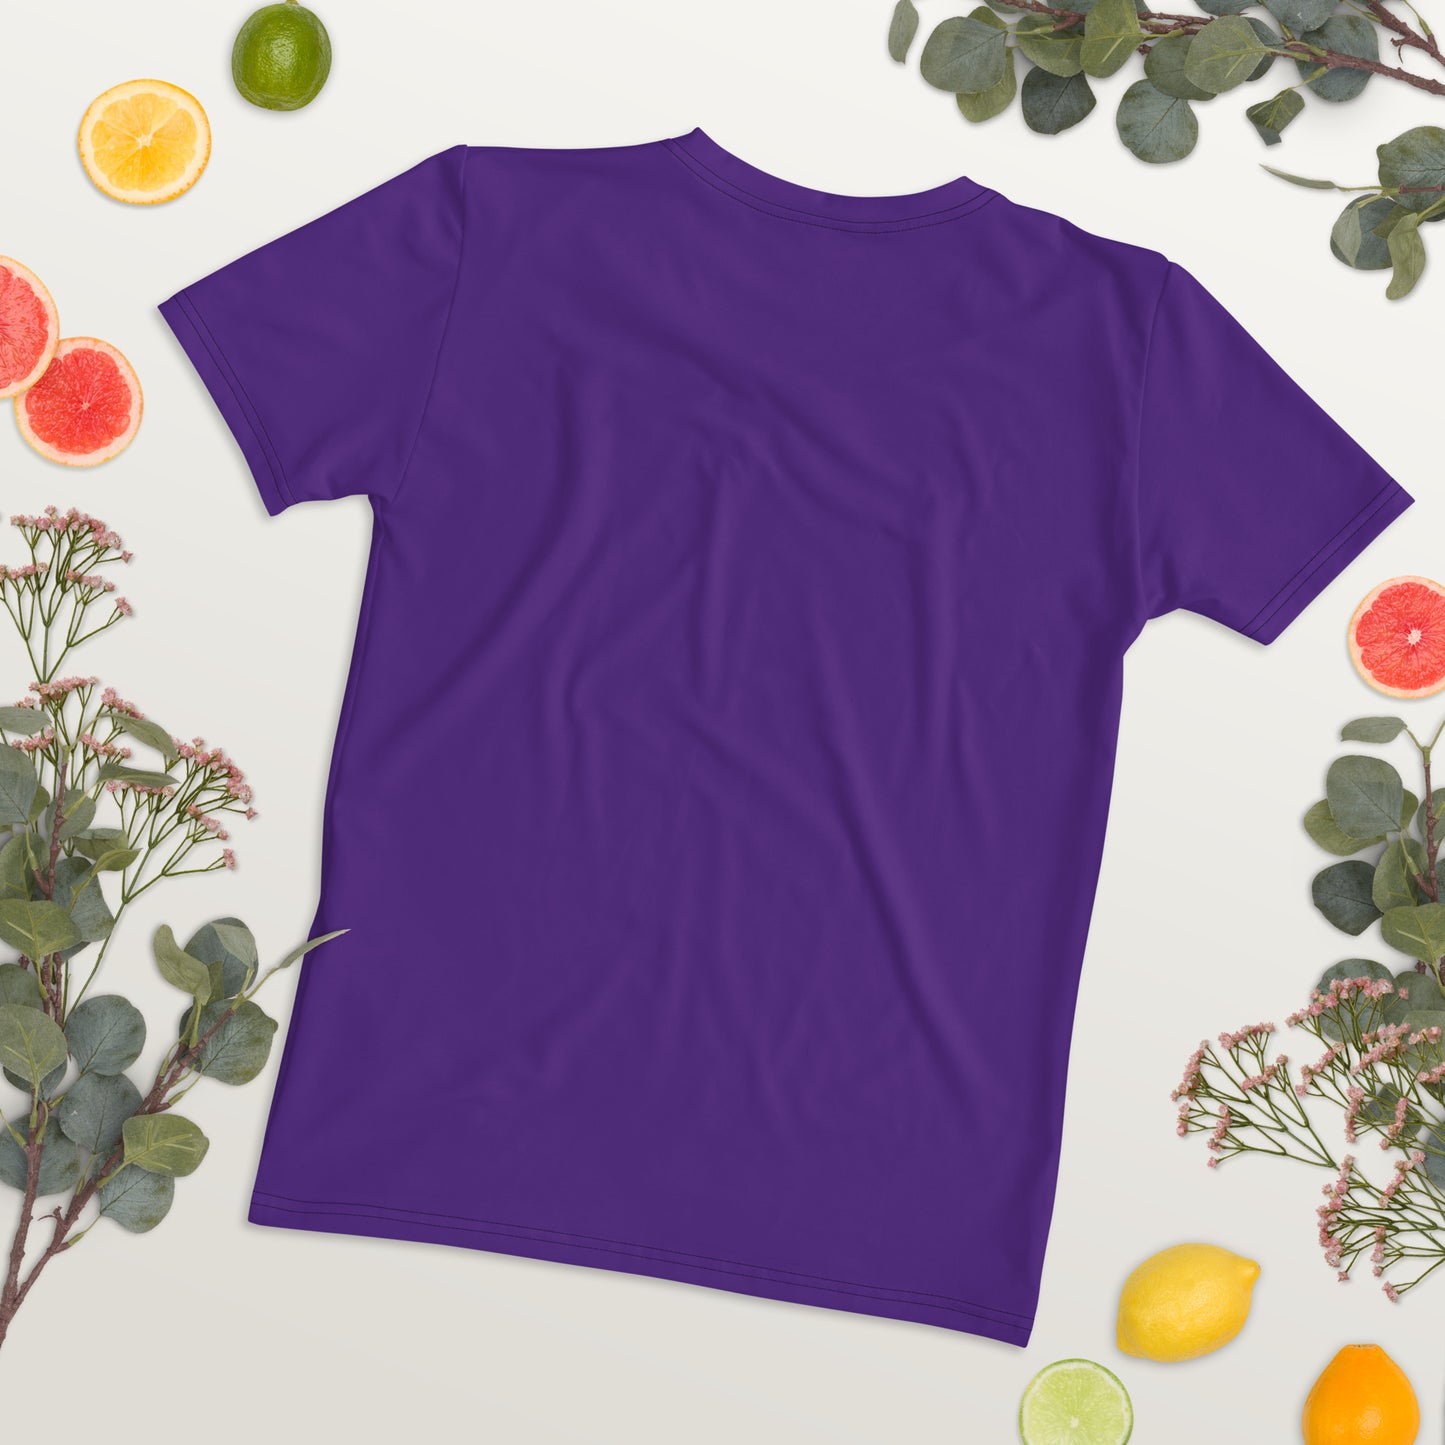 Anime girl purple Women's T-shirt